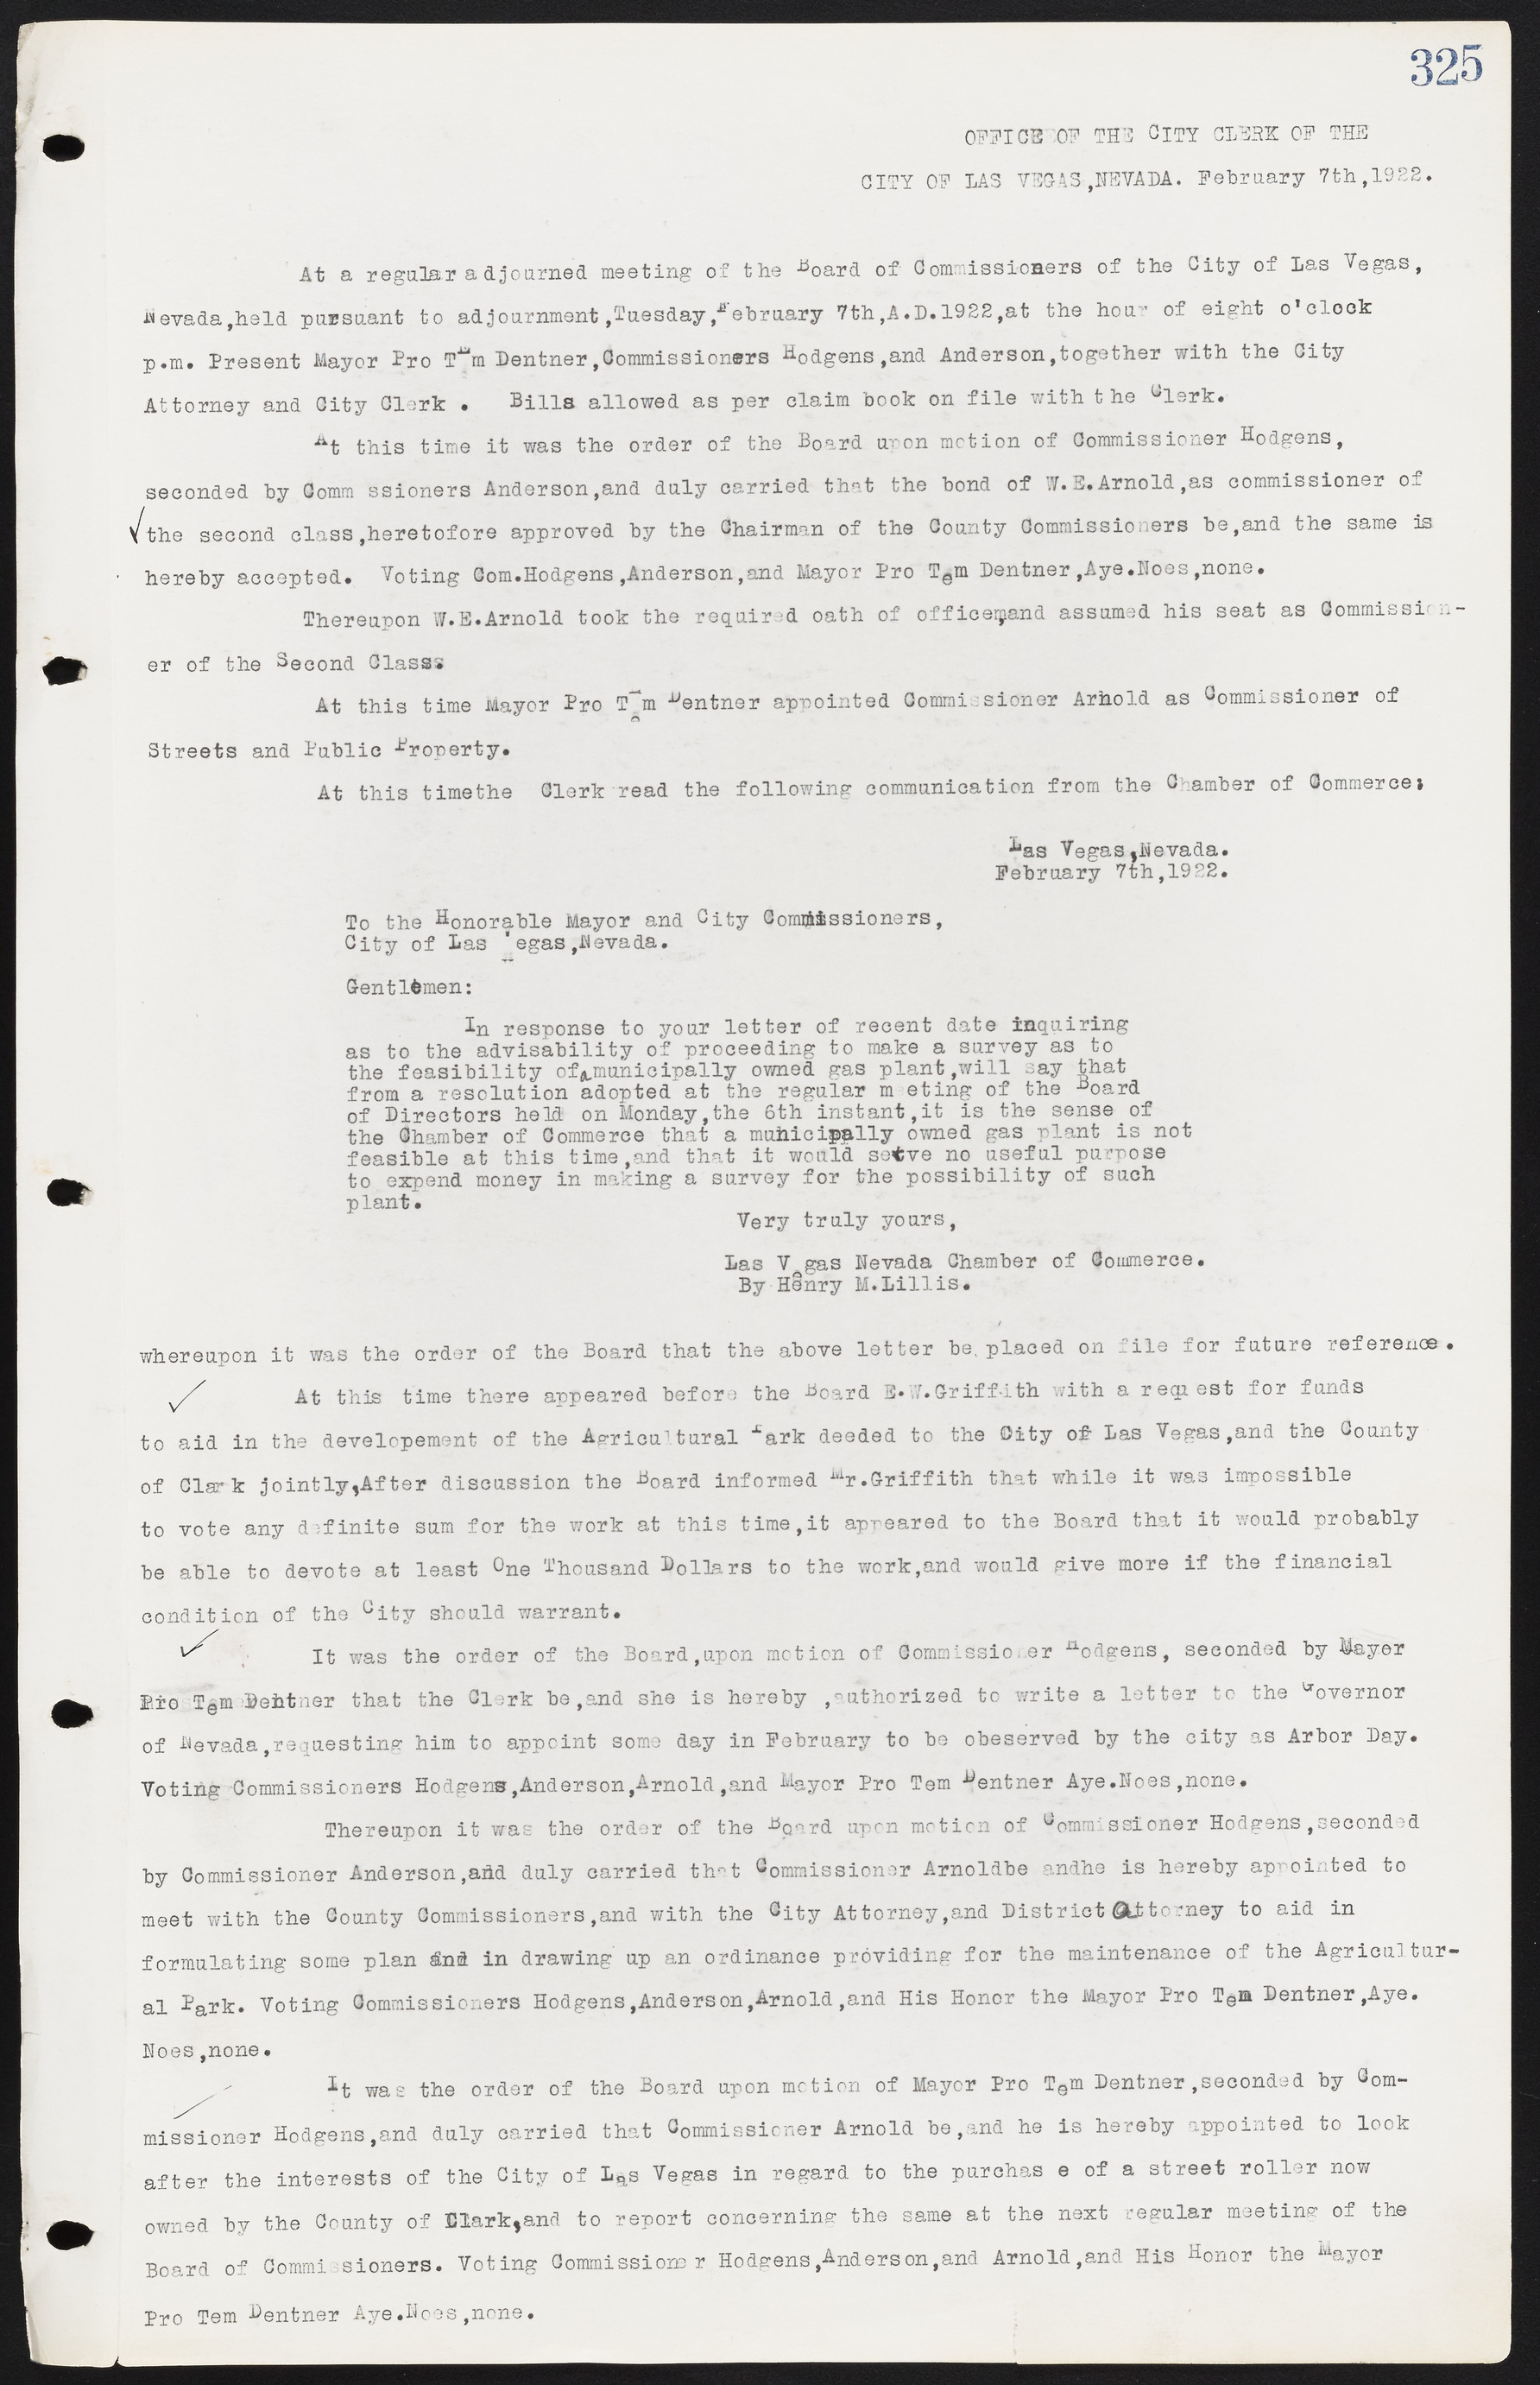 Las Vegas City Commission Minutes, June 22, 1911 to February 7, 1922, lvc000001-341